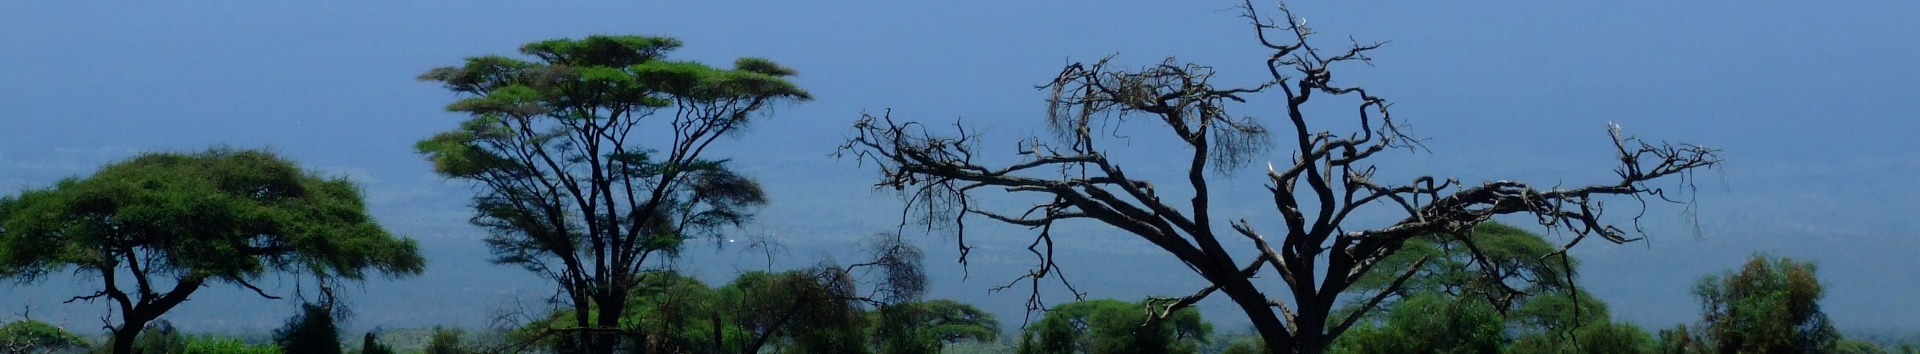 Bäume in Kenia